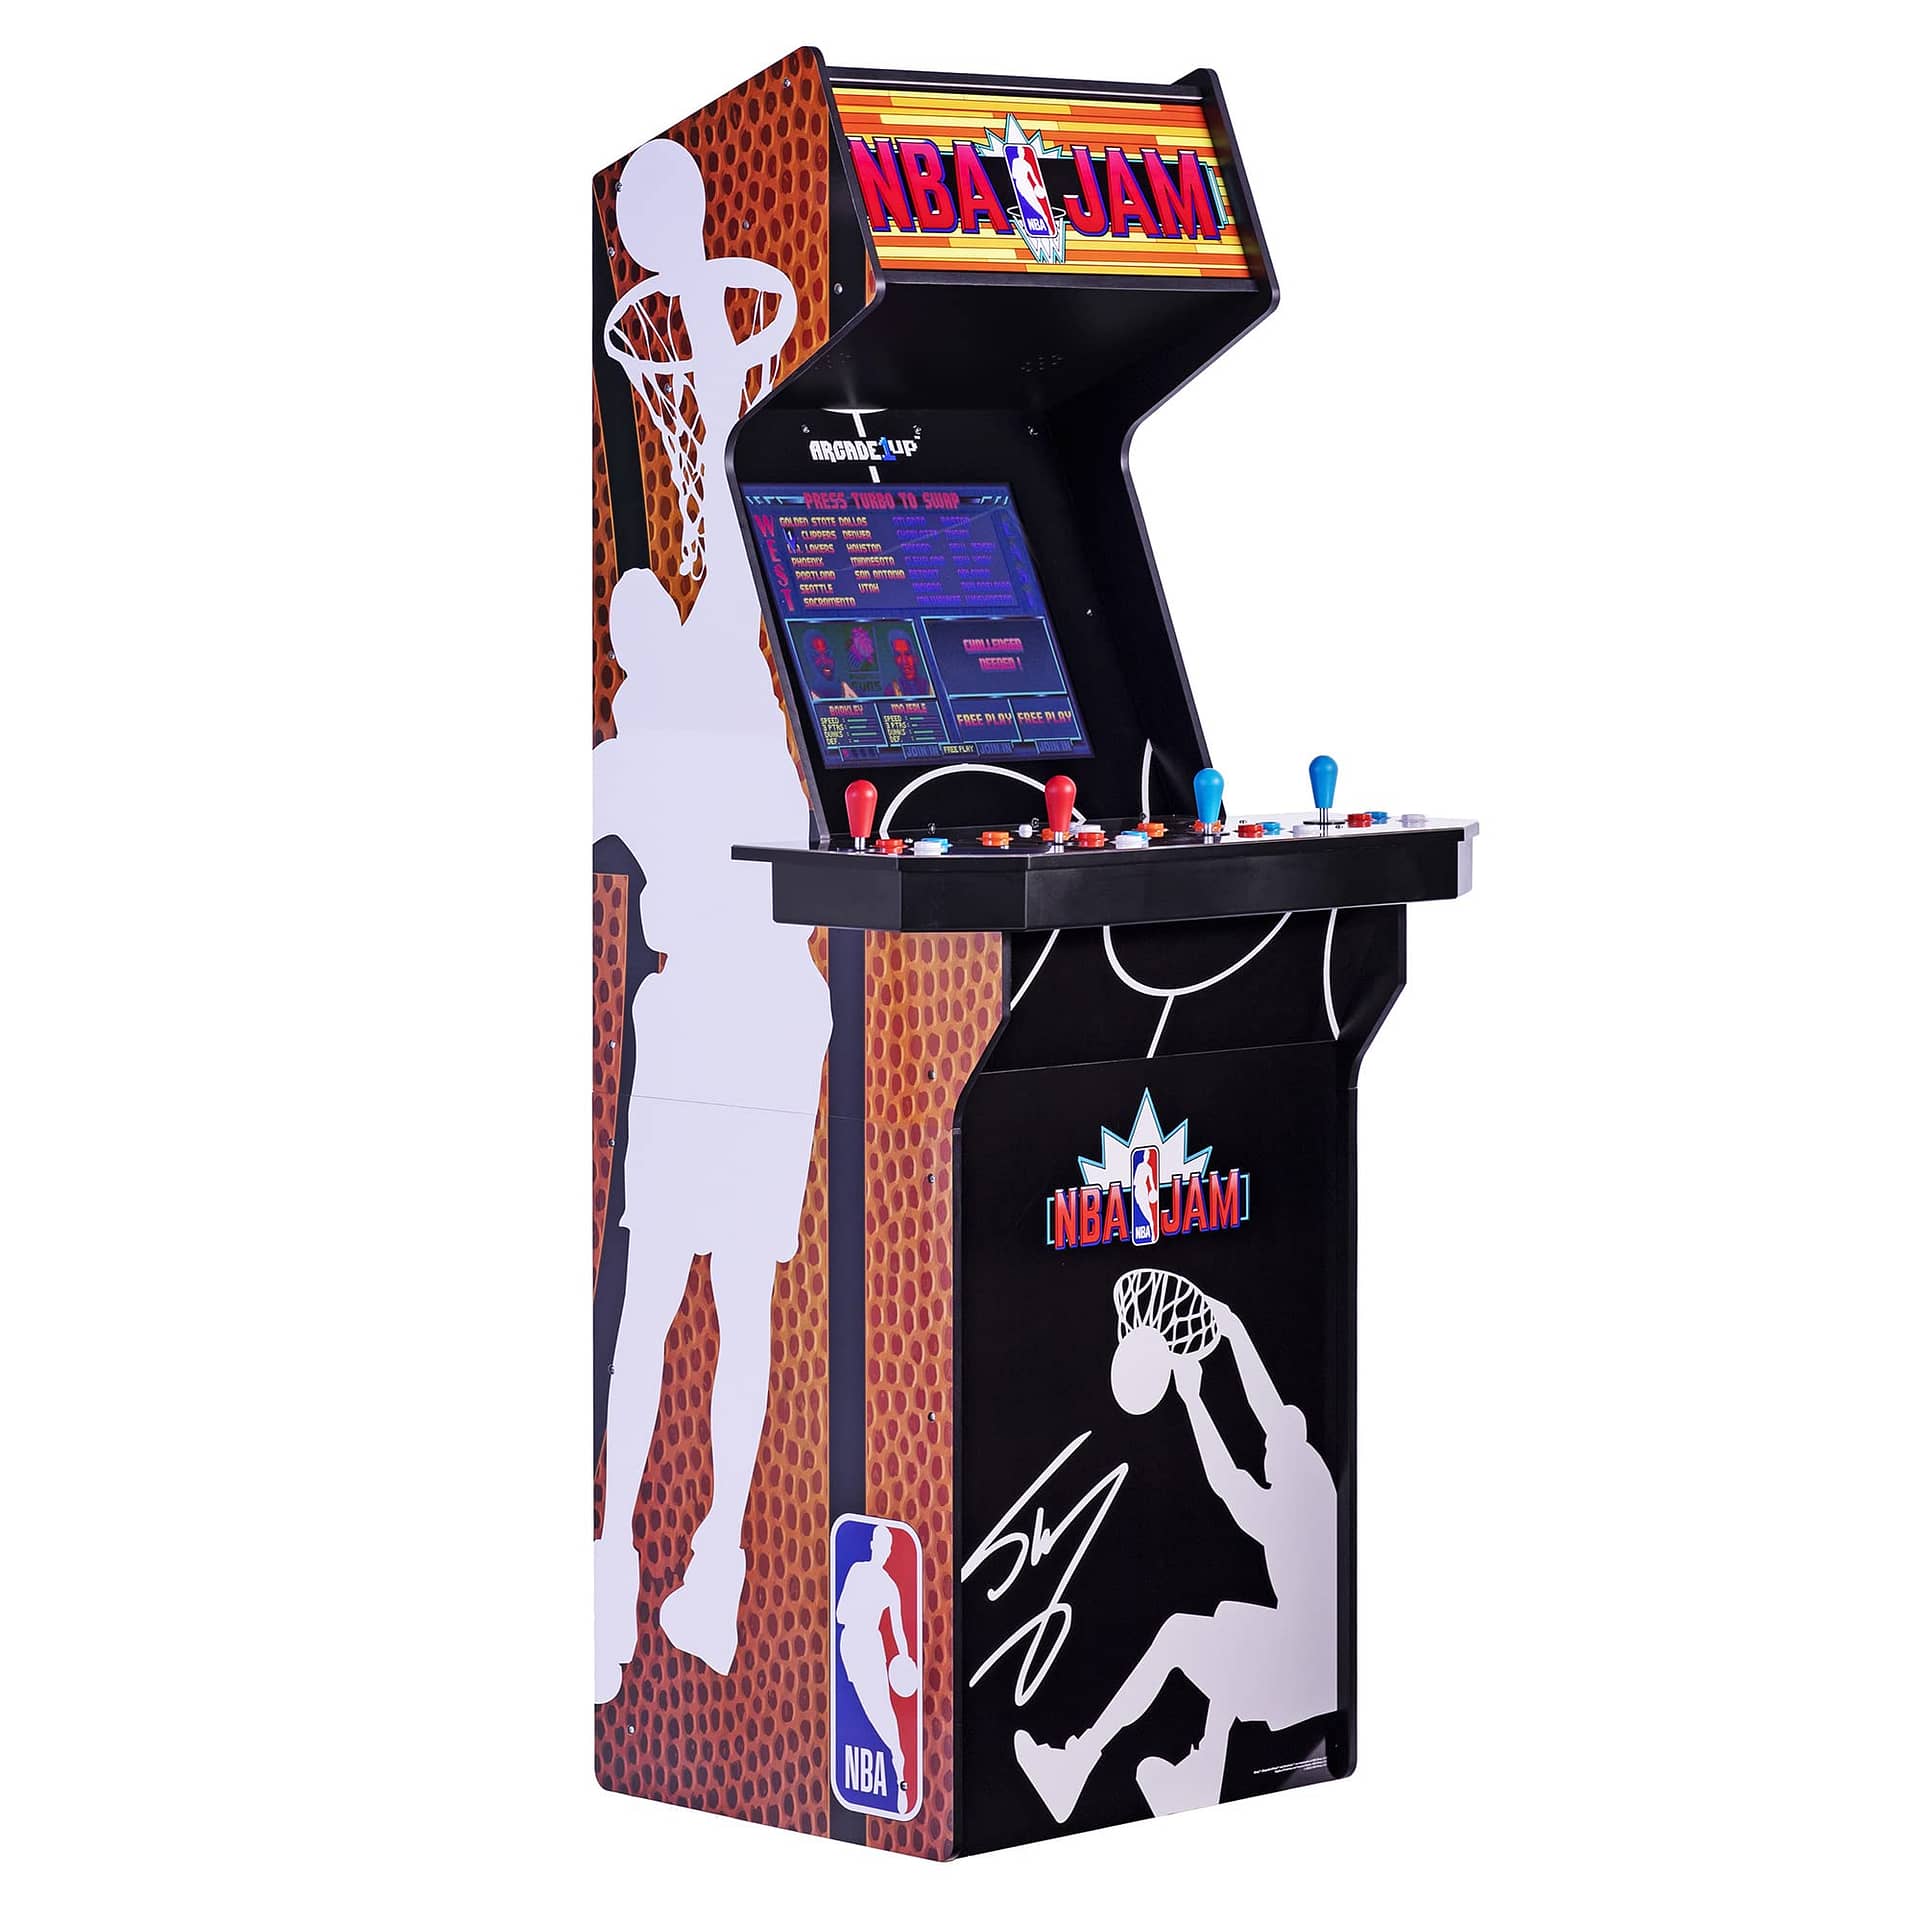 NBA JAM: SHAQ Edition Arcade Machine